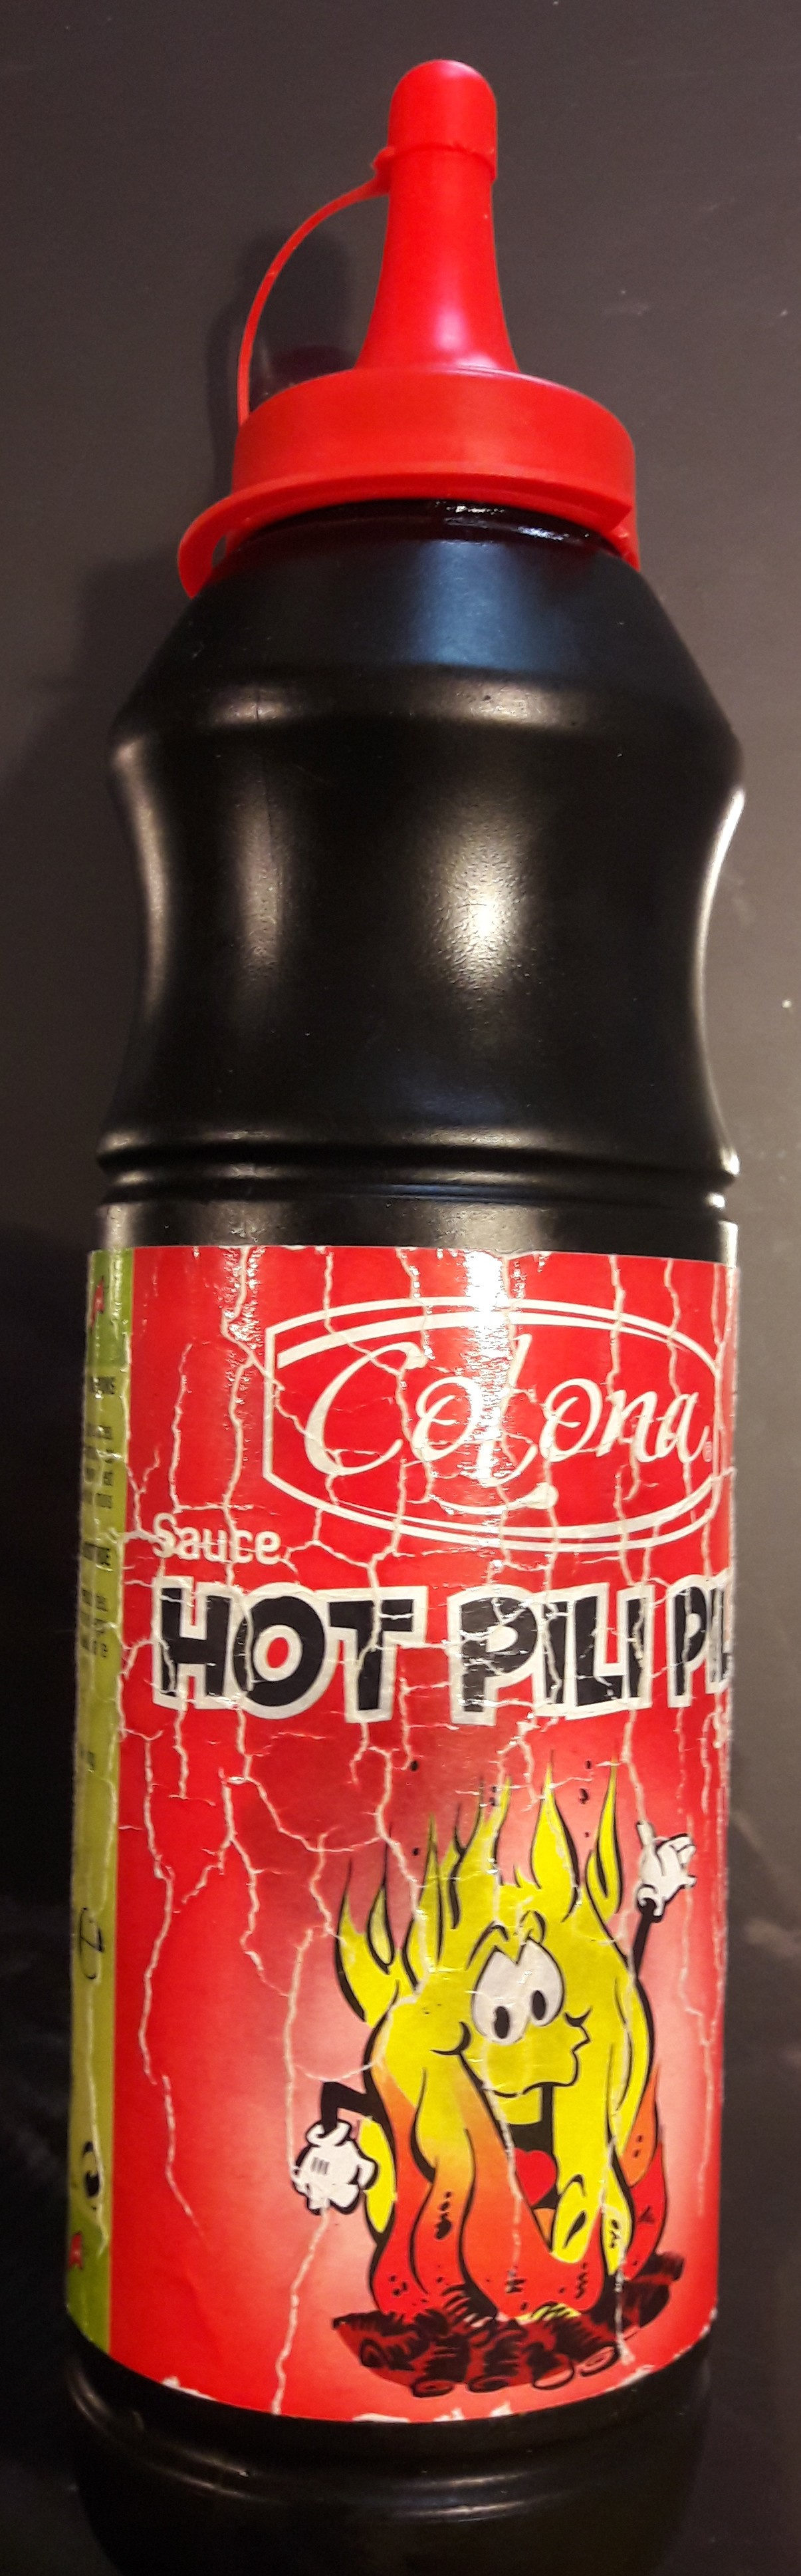 Colona sauce hot pili pilitube - Product - fr